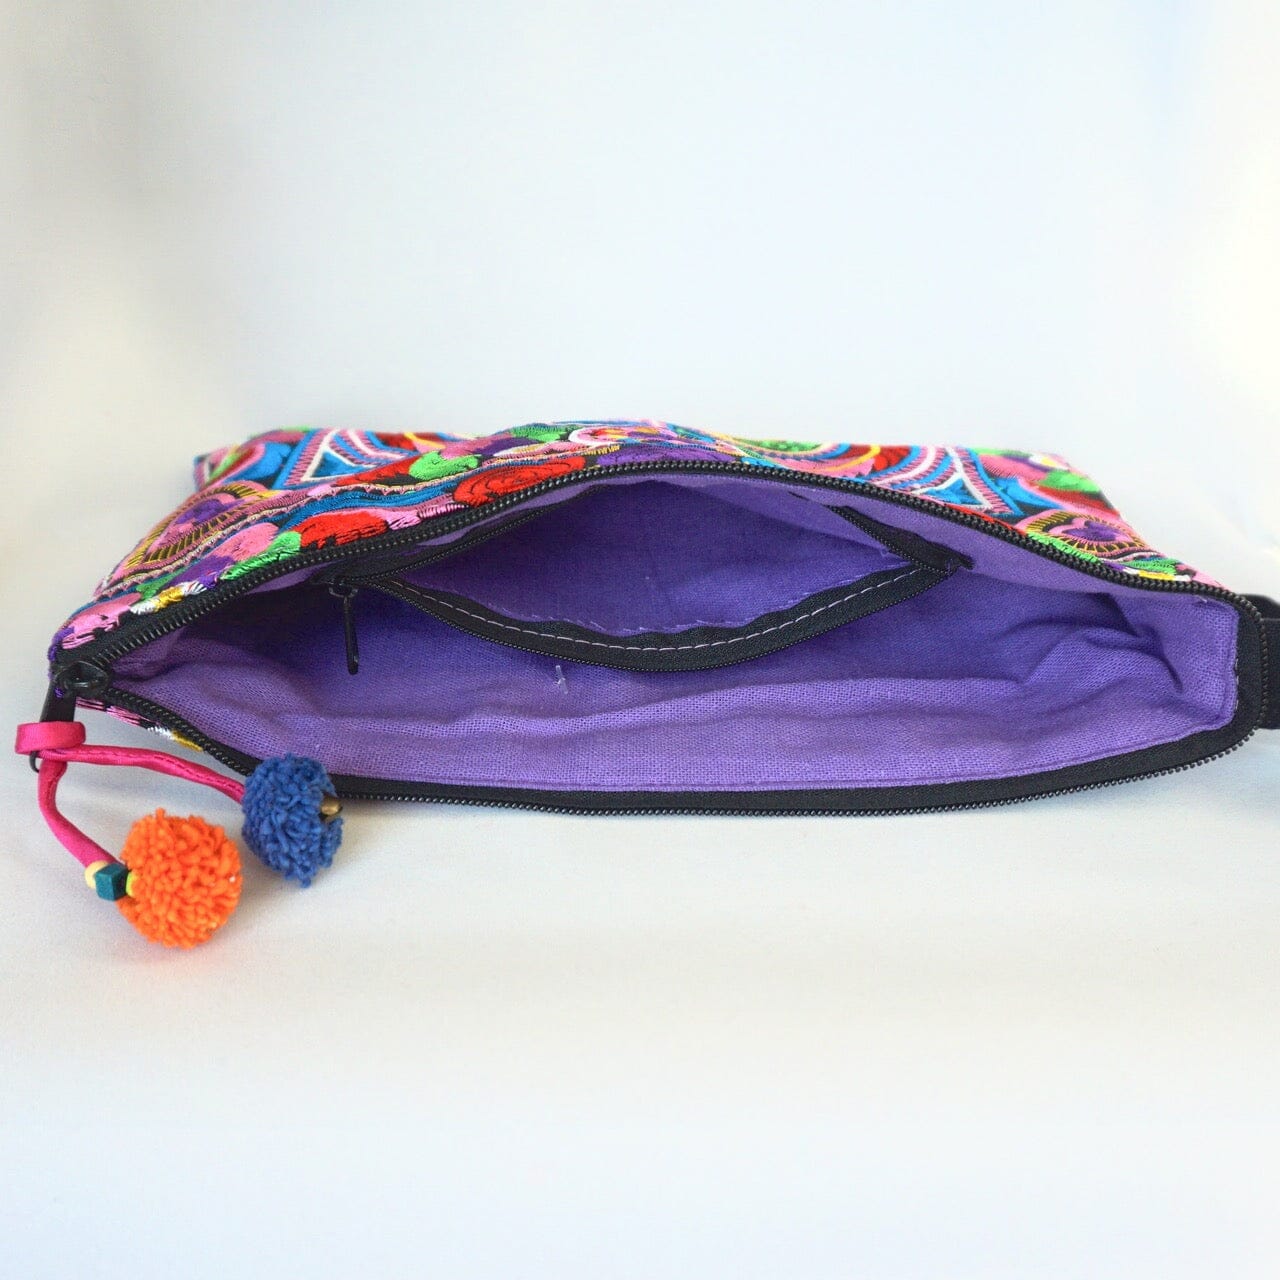 Colorful Embroidered Wristlet Bag - Boho Chic Pom-Pom Clutch